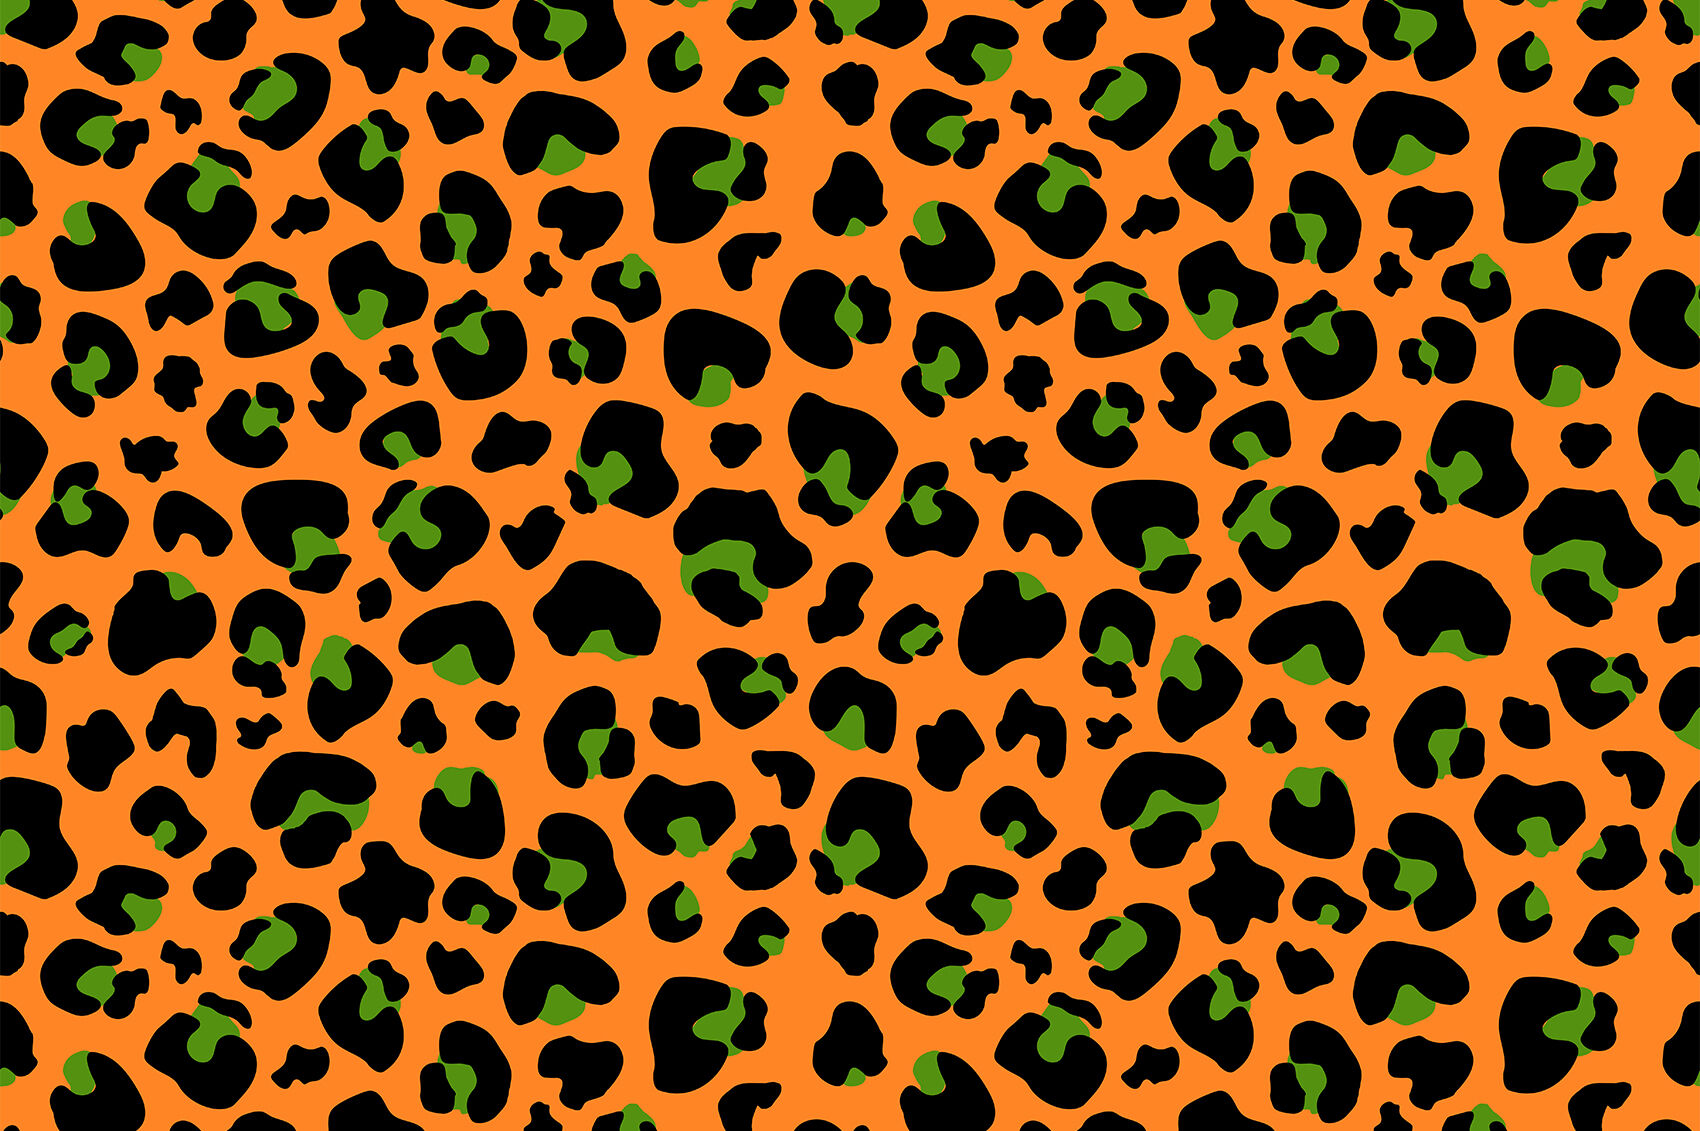 Leopard pattern. Leopard print SVG. Leopard background By IrinaShishkova